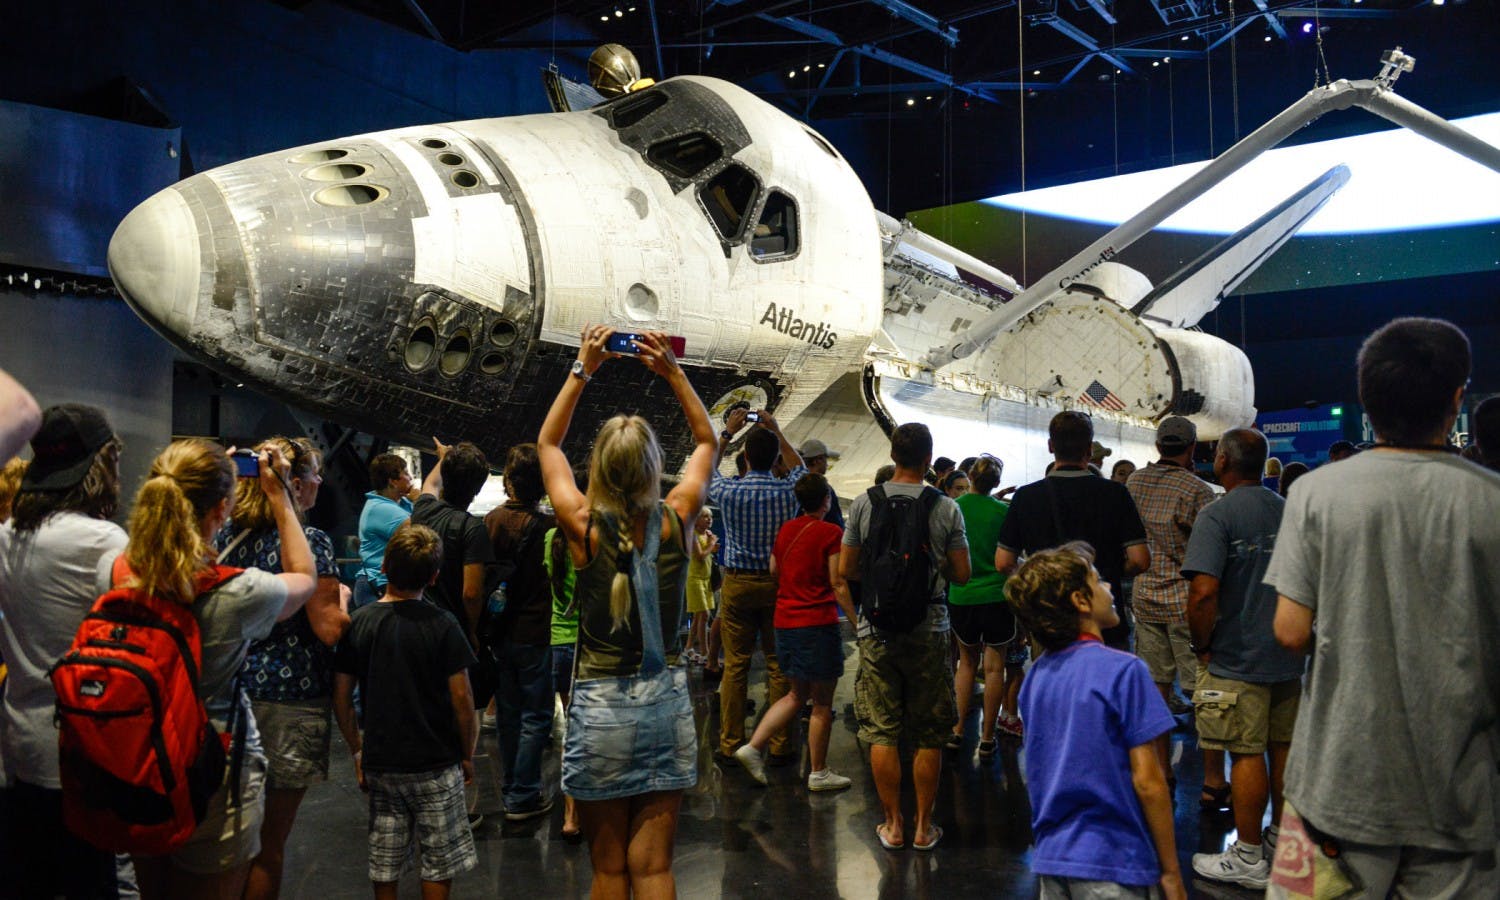 kennedy space center - orlando - space shuttle atlantis - visitors.jpg